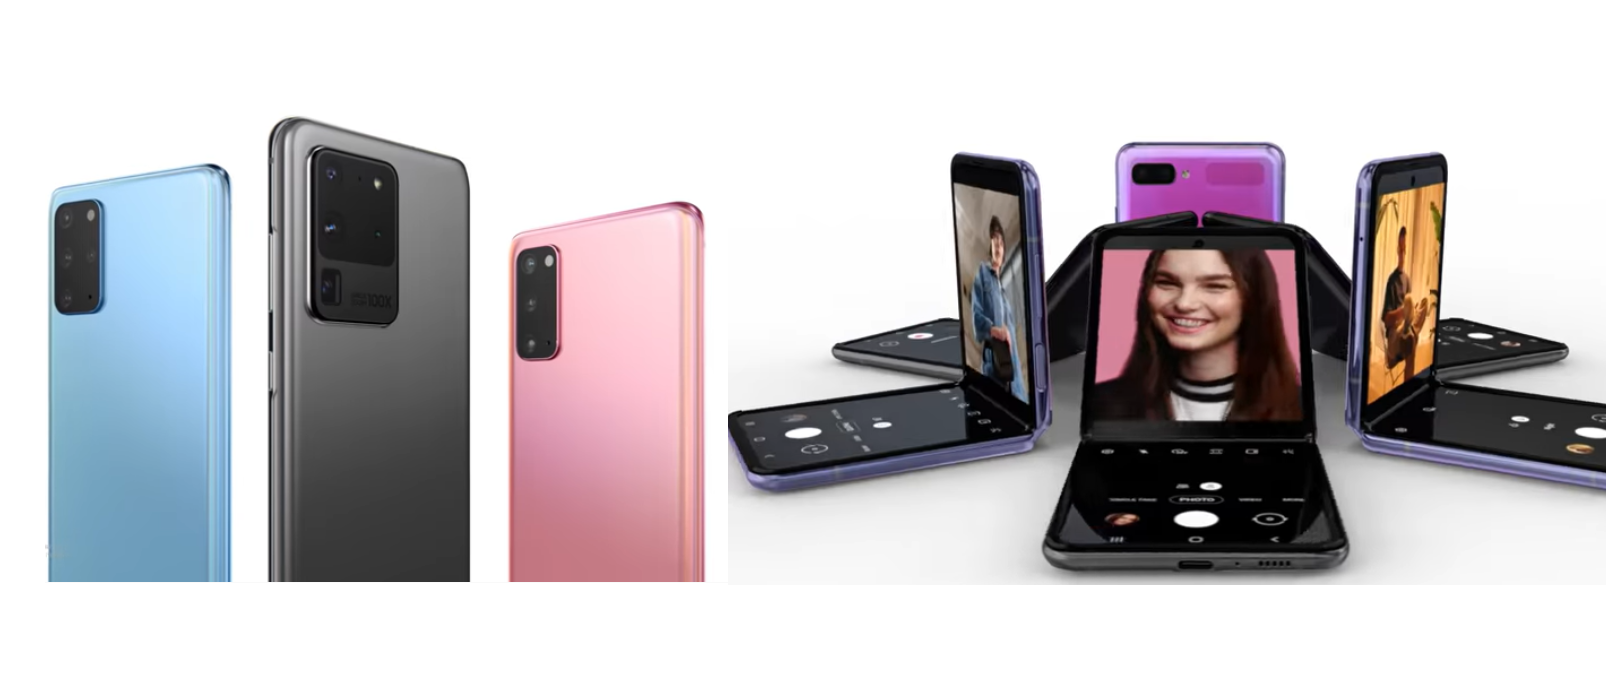 Samsung's newest smartphones - Galaxy S20, Galaxy S20 Plus, Galaxy S20 Ultra & Galaxy Z Flip